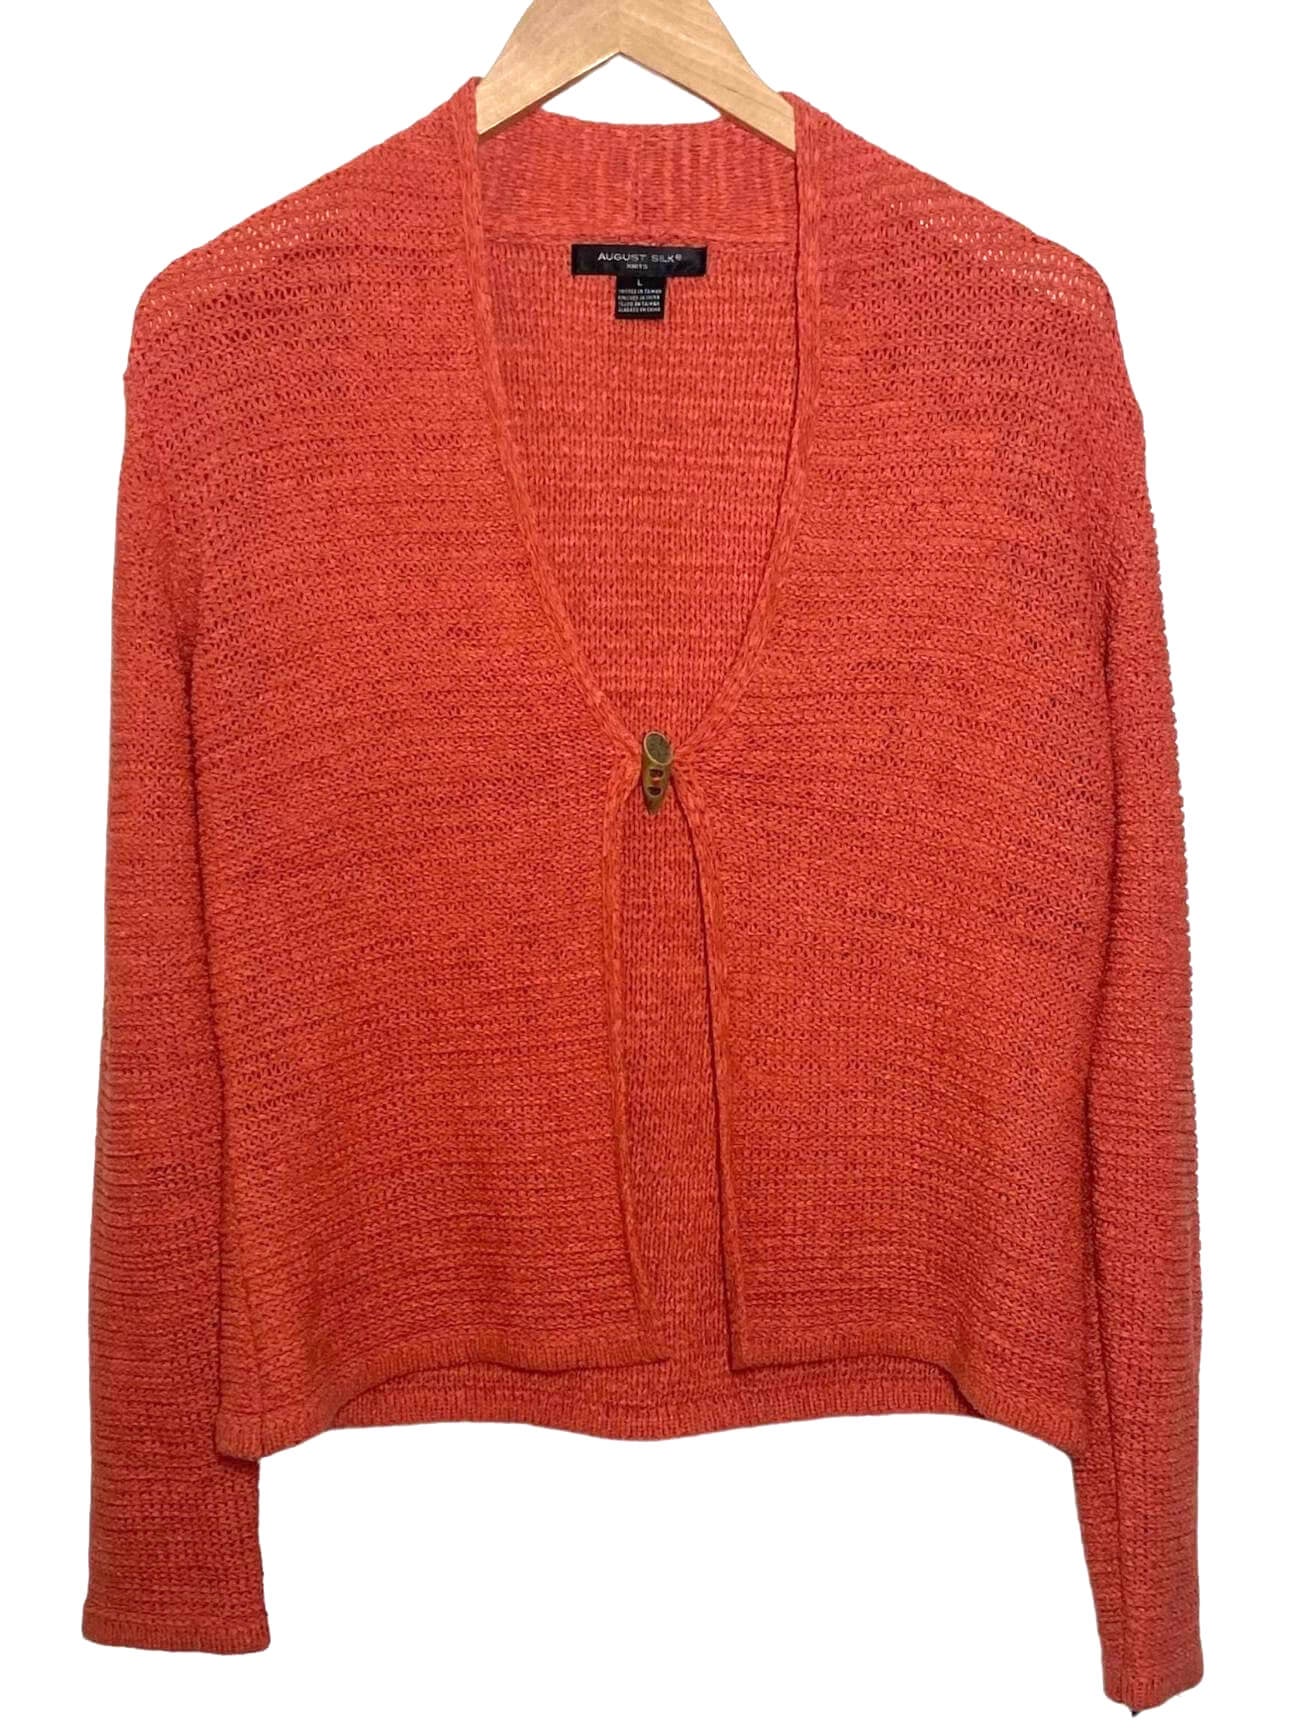 Dark Autumn AUGUST SILK rust orange toggle button cardigan sweater